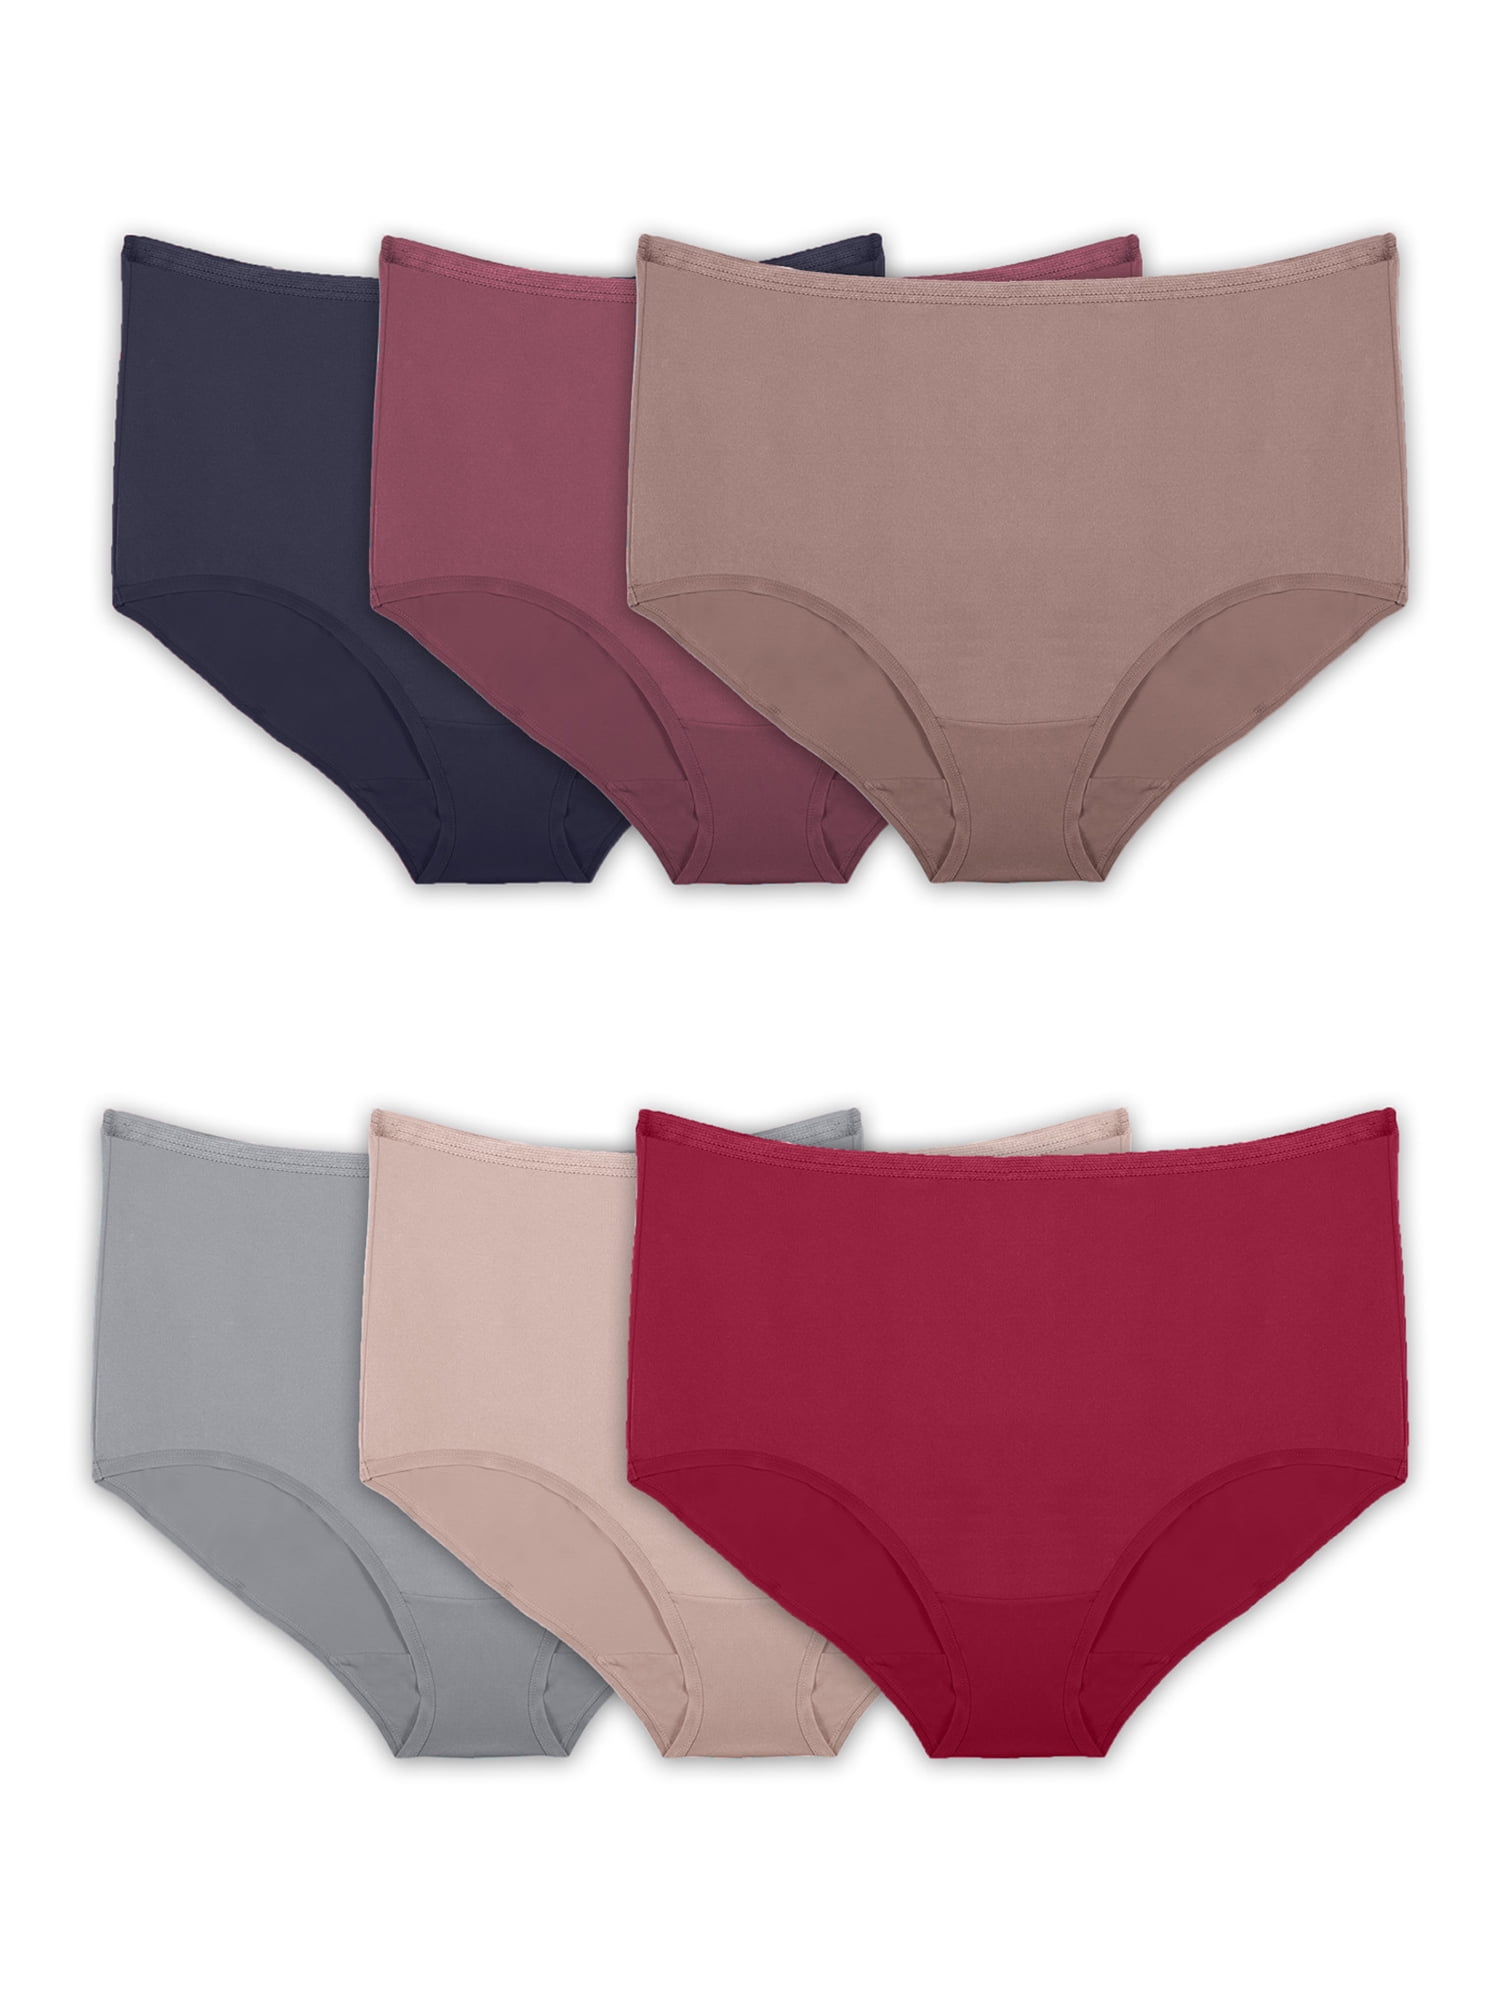 Fruit of the Loom Women's Microfiber Brief Underwear, 6 Pack, Sizes M-3XL